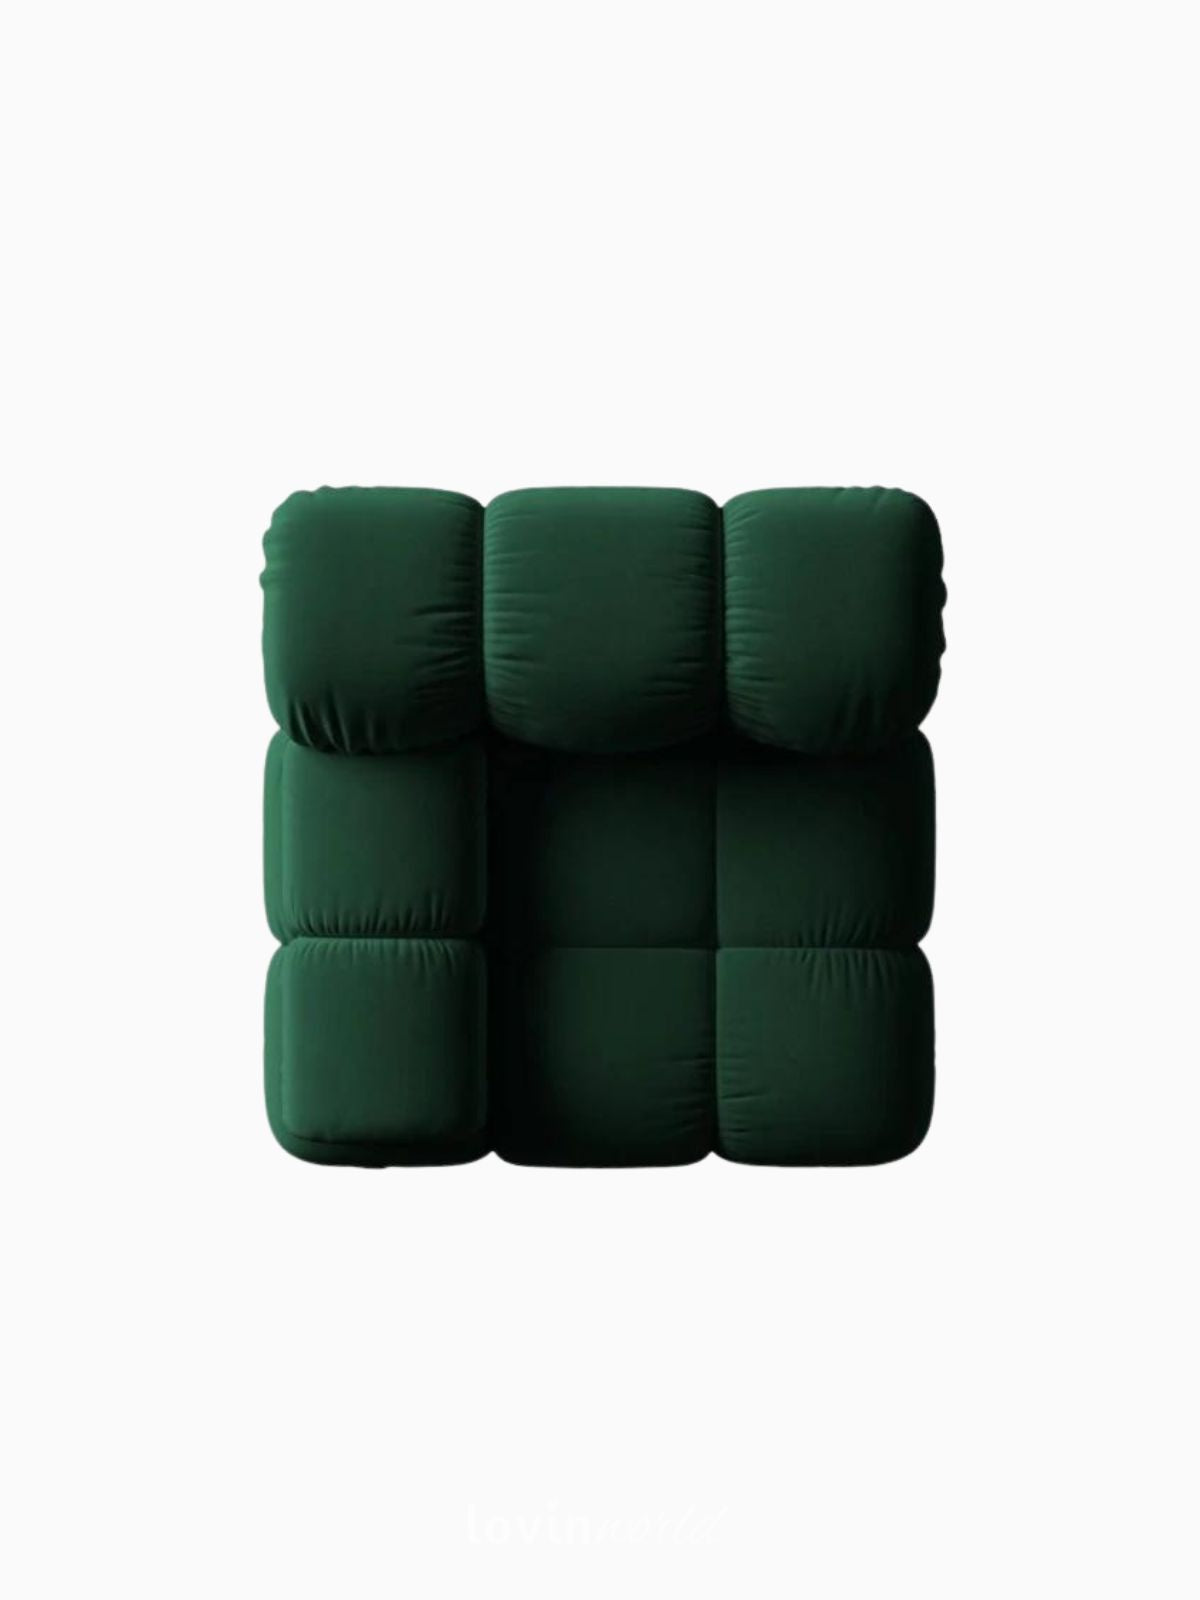 Divano modulare Bellis in velluto, colore verde-5